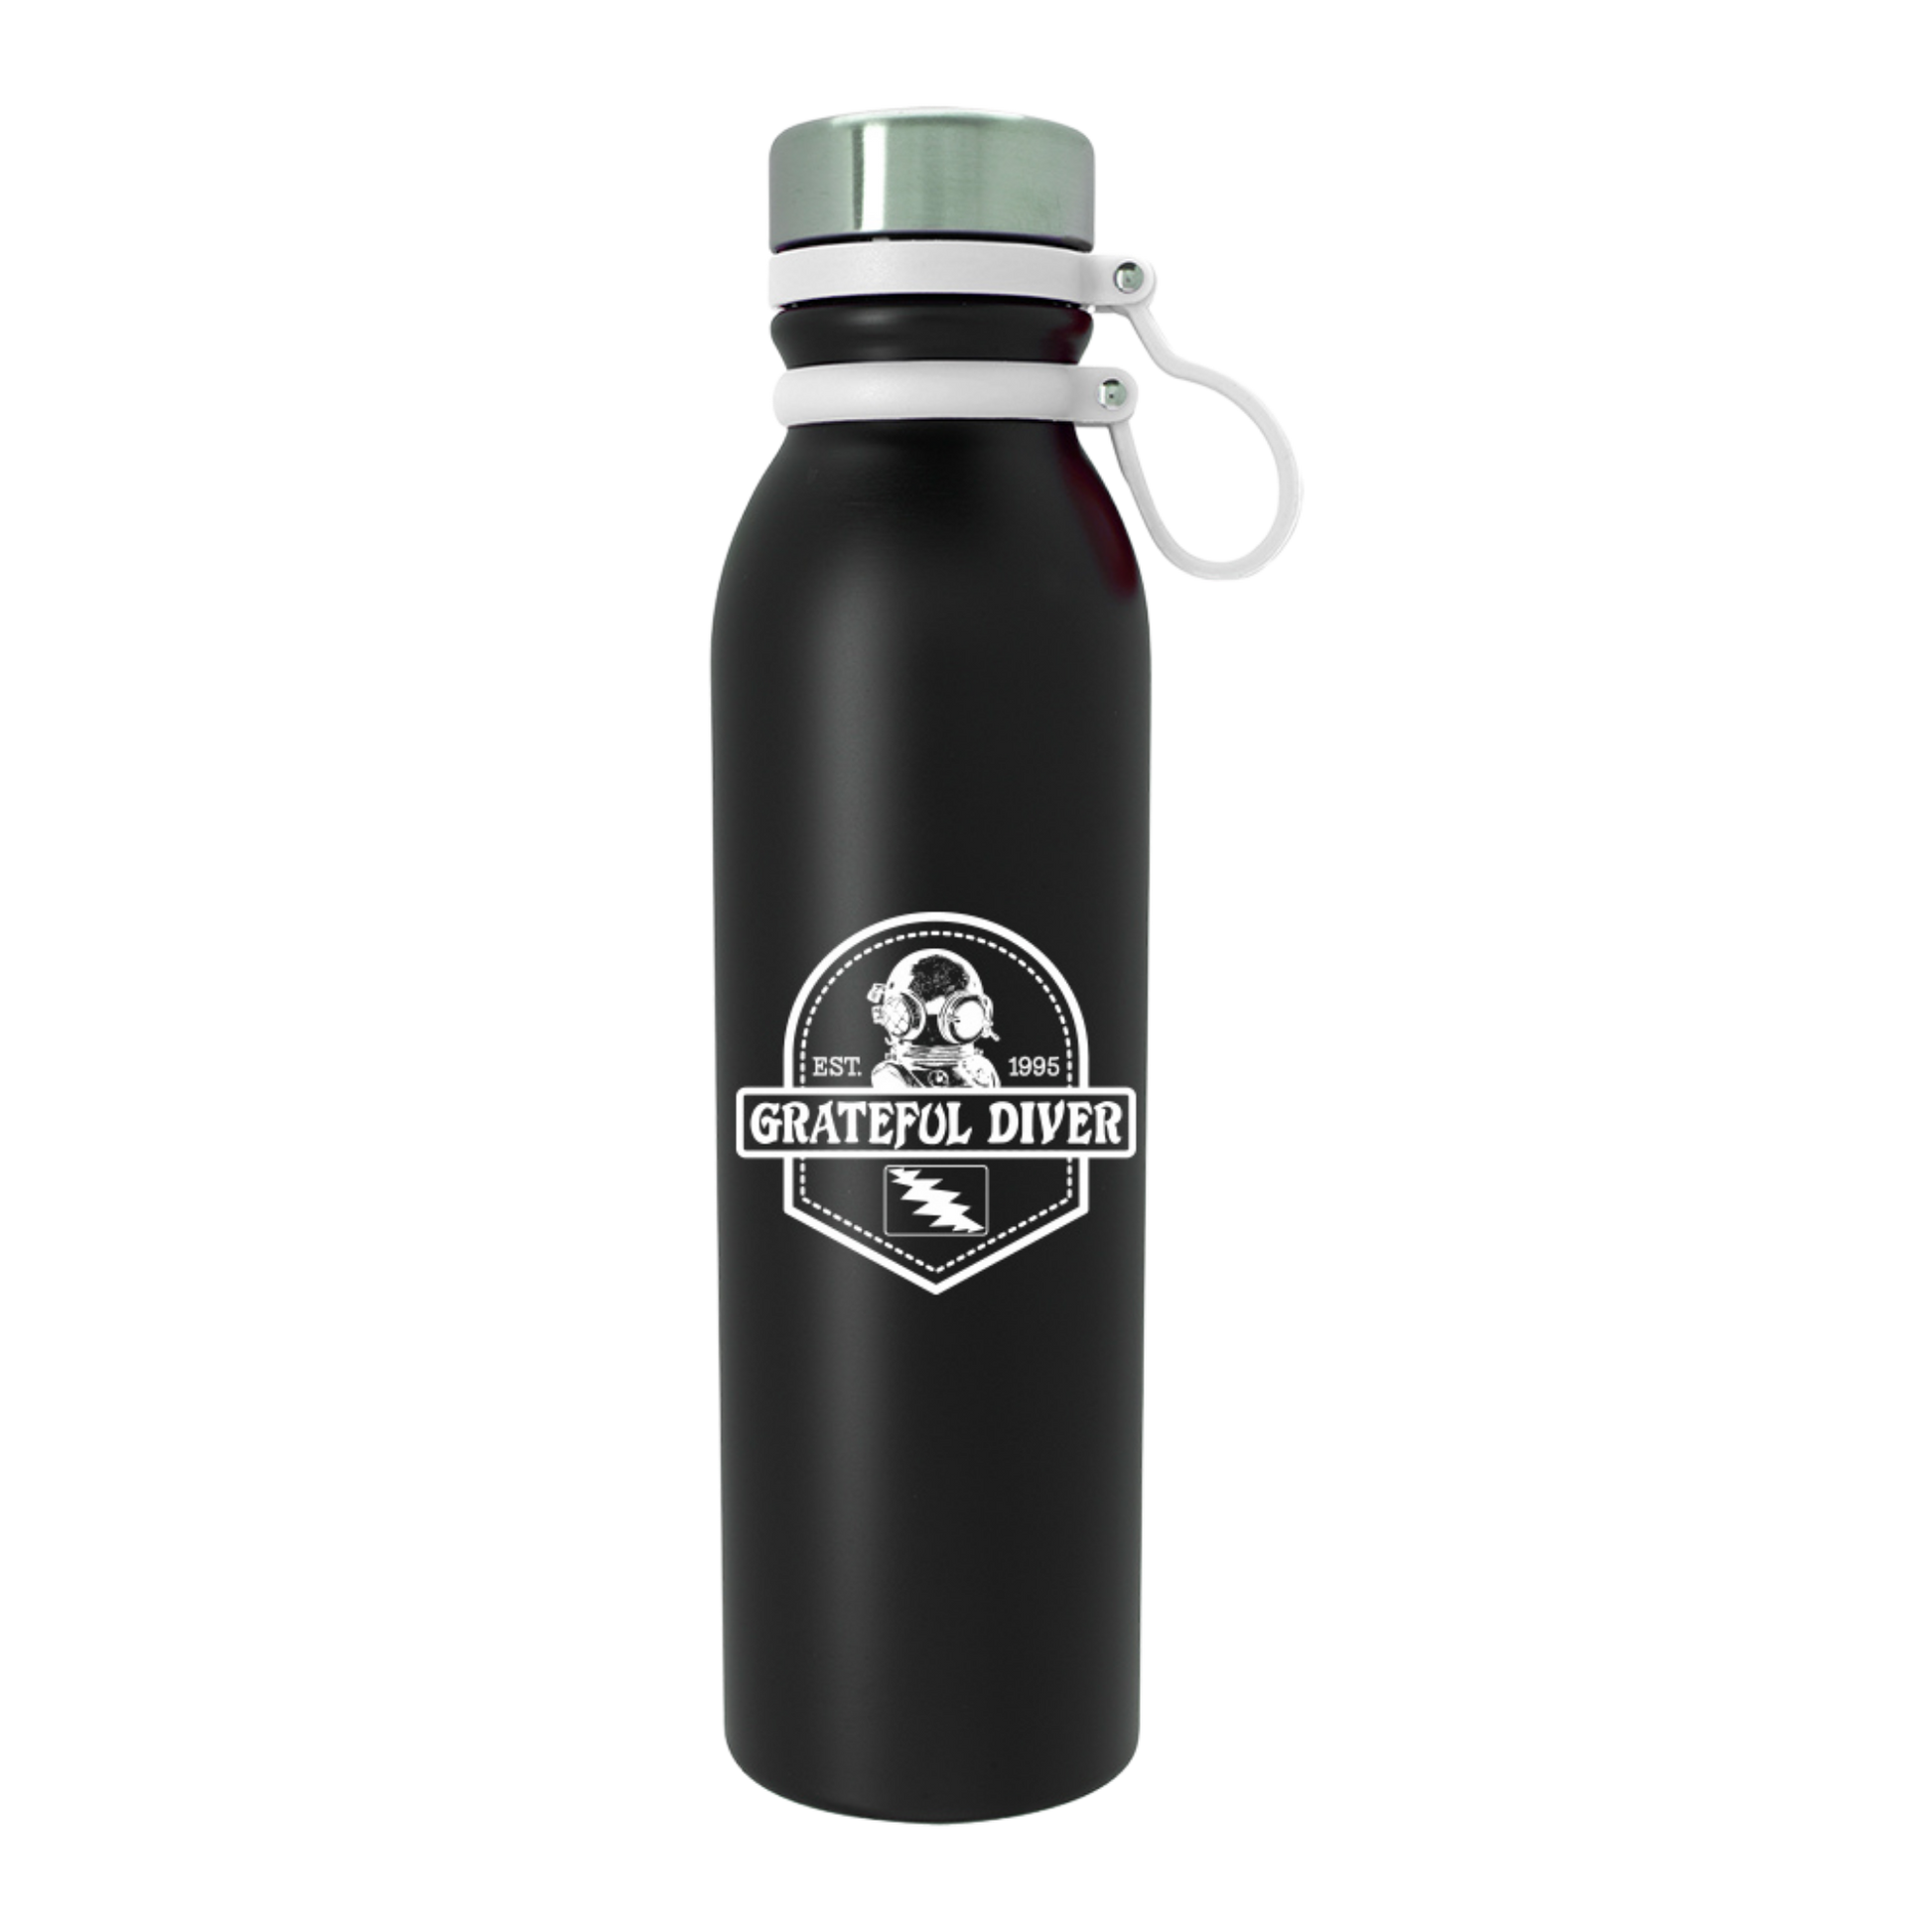 25oz Custom Stainless Steel Water Bottles